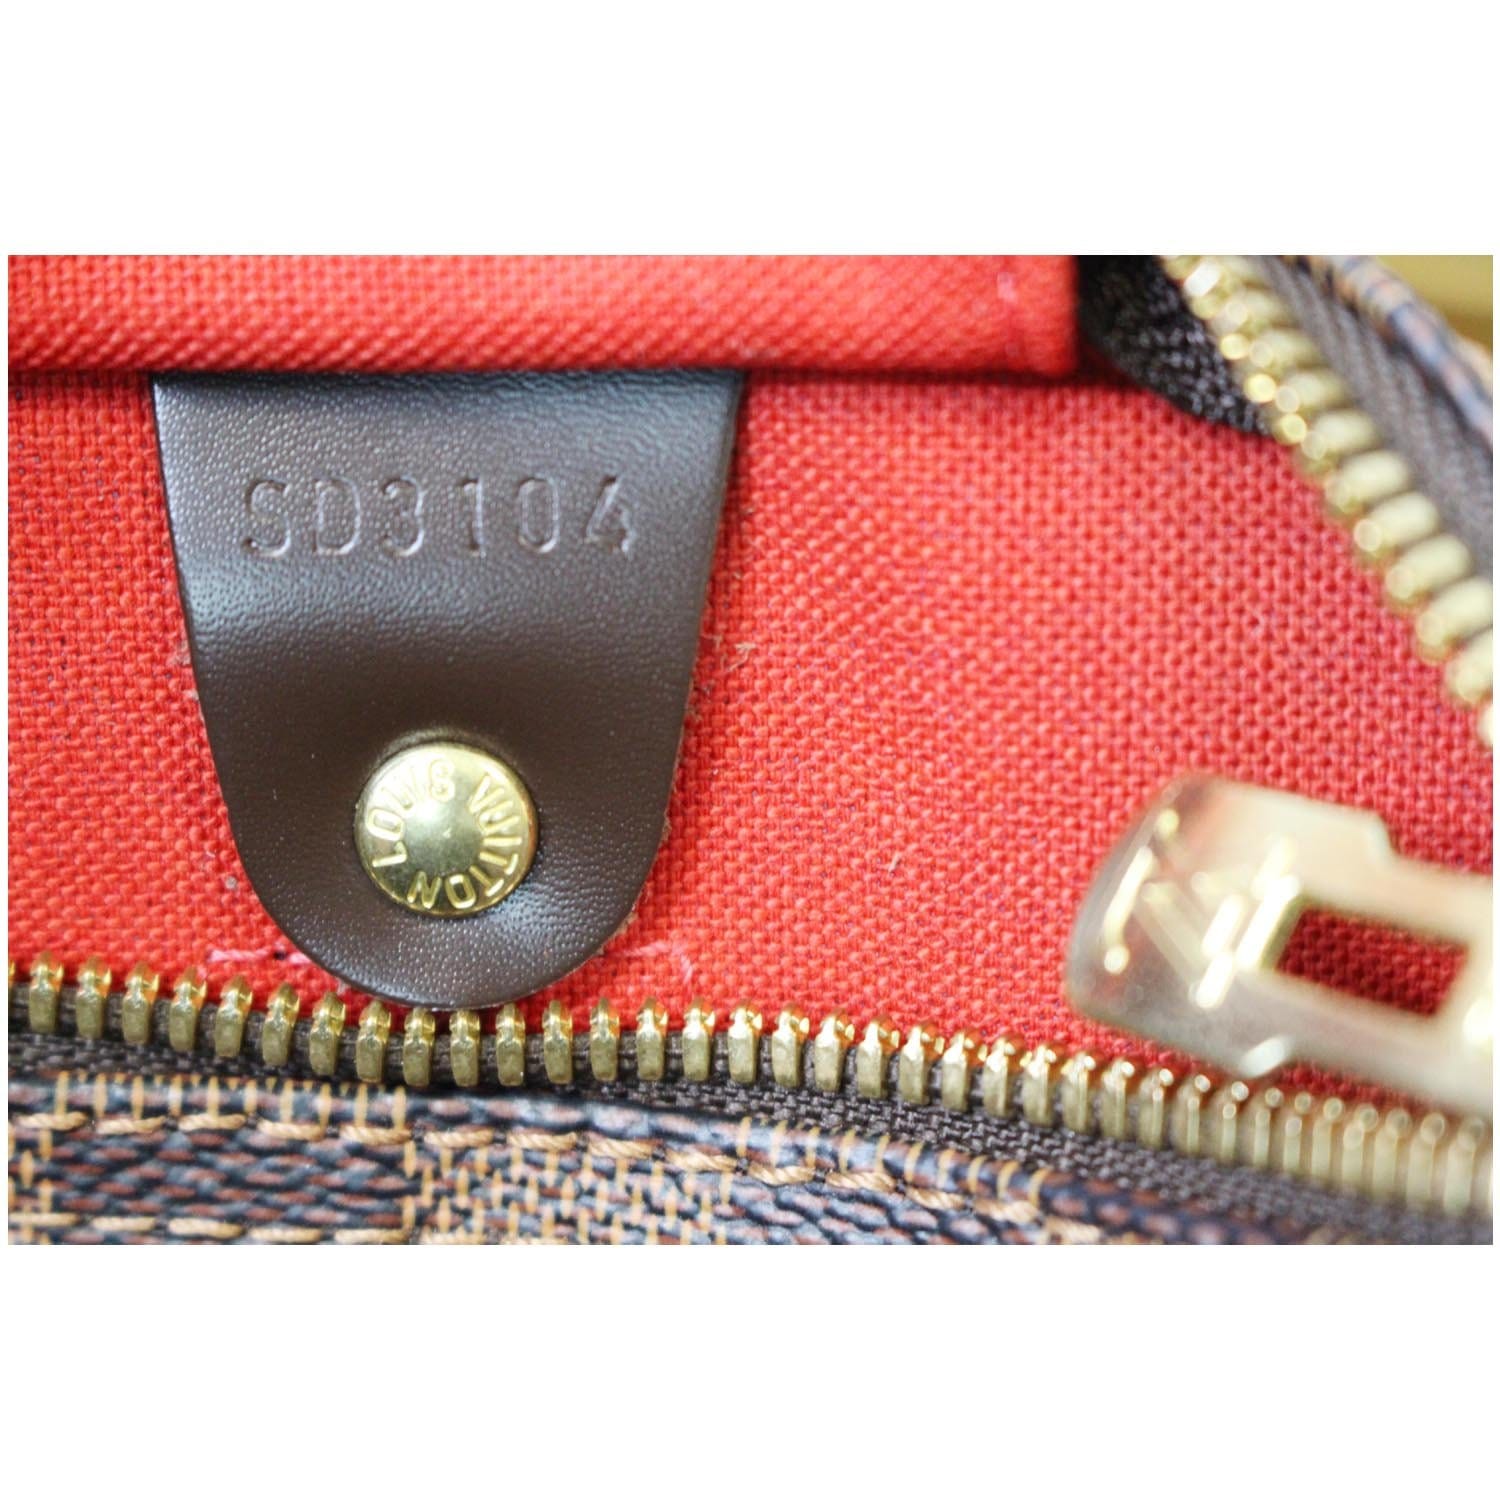 Speedy 30 Bandouliere Damier Ebene – Keeks Designer Handbags